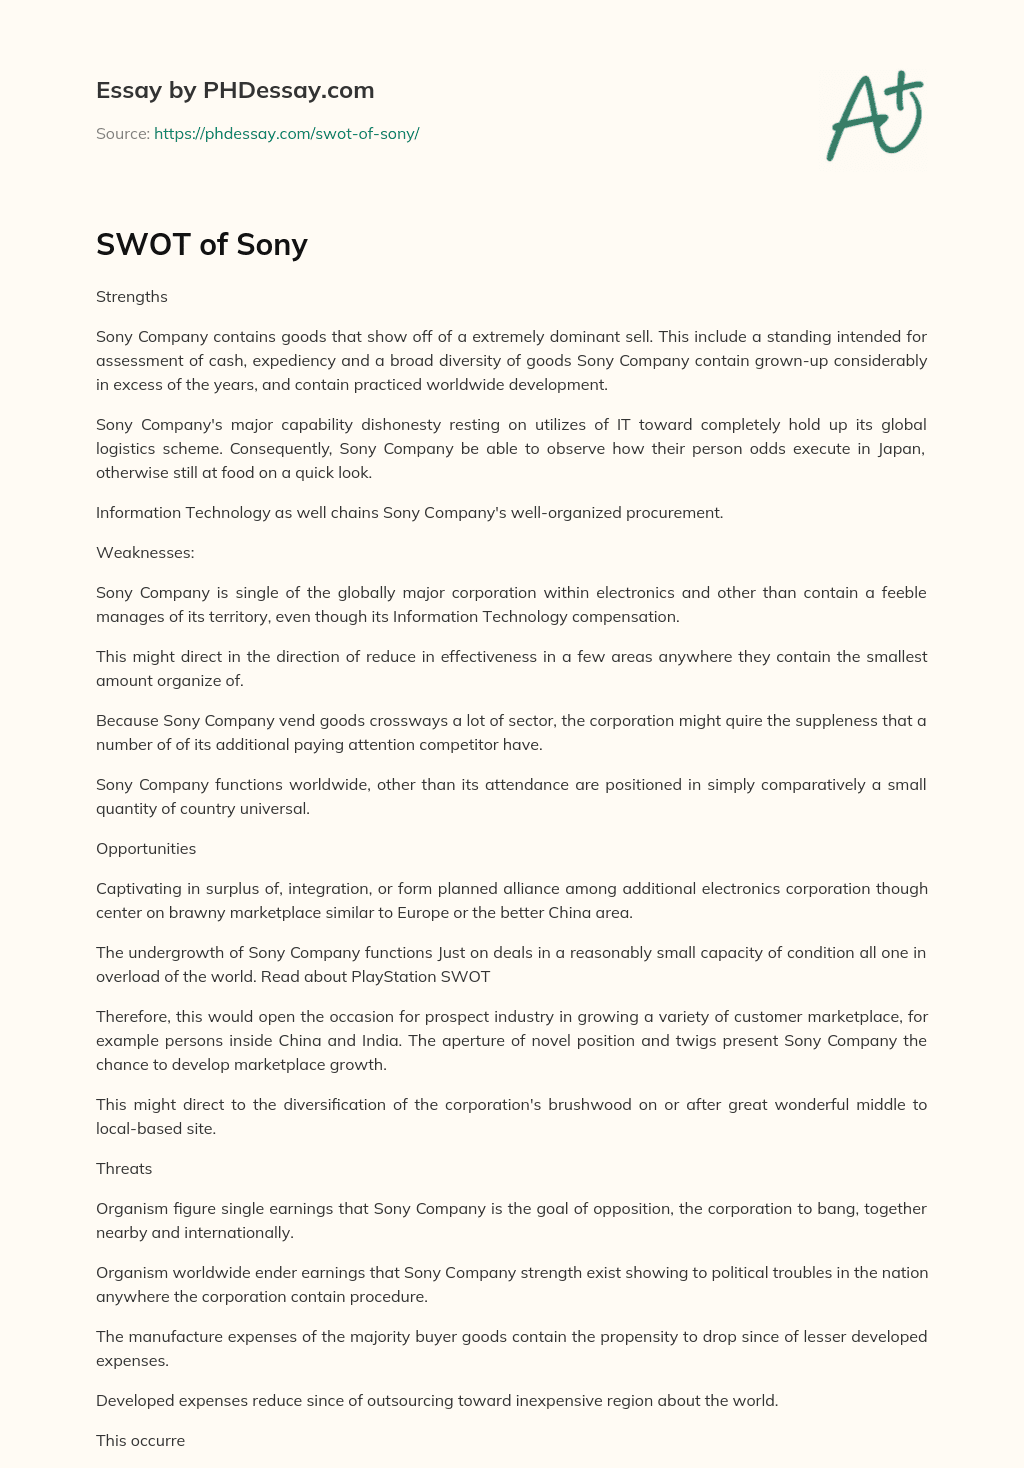 SWOT of Sony essay